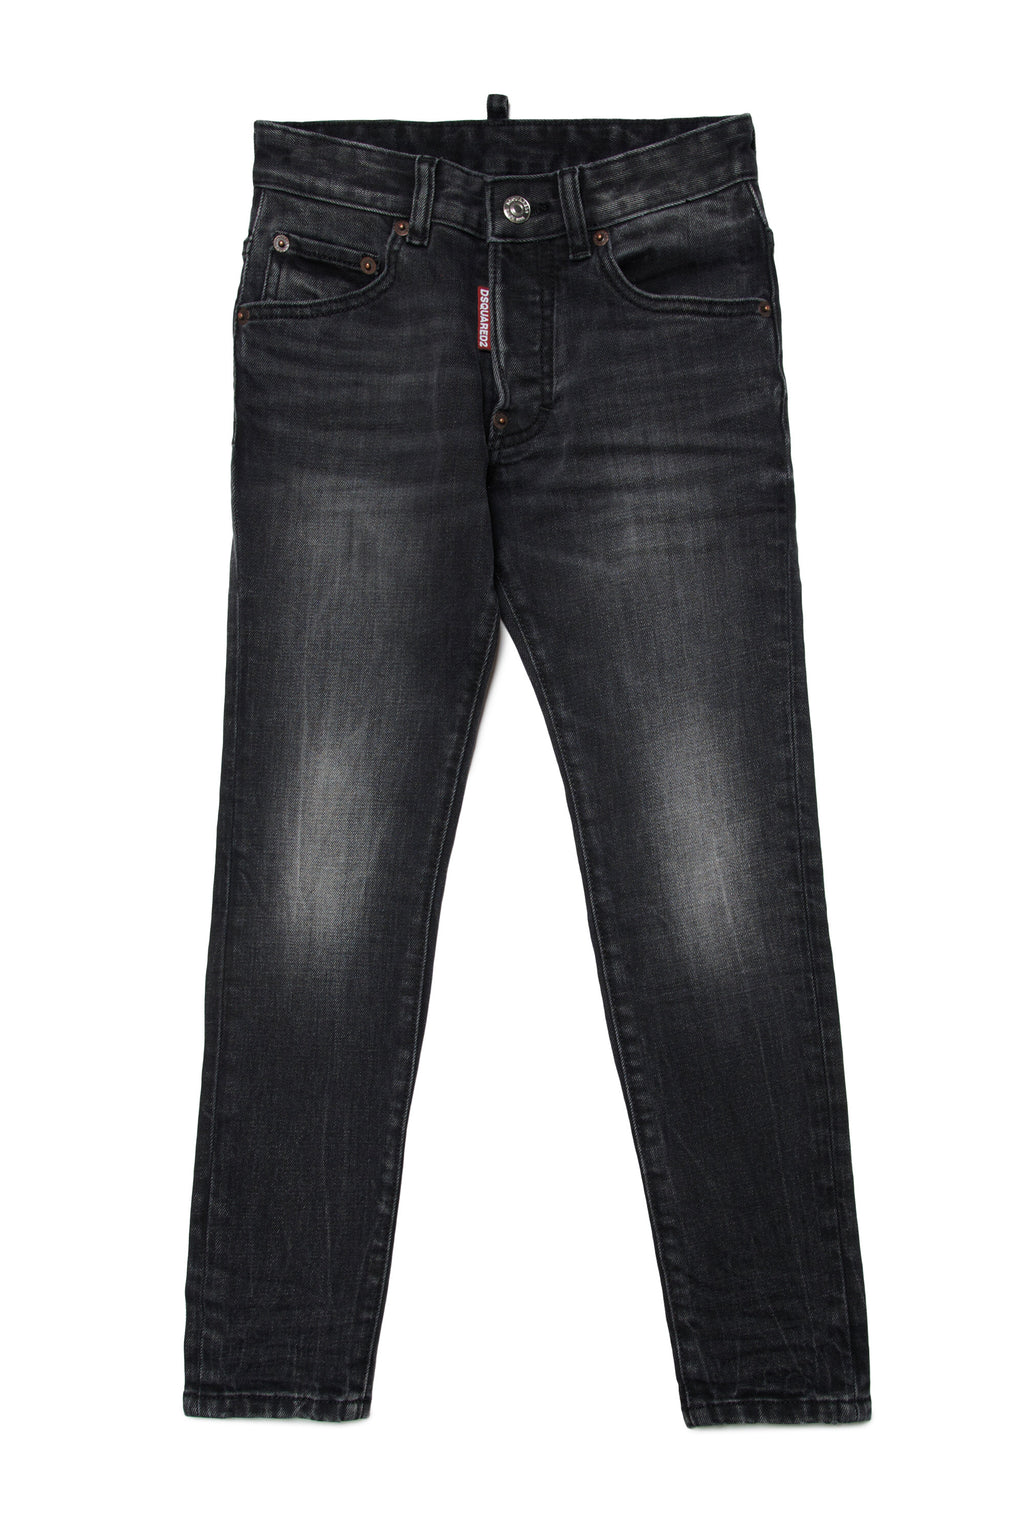 Black shaded skinny jeans - Skater